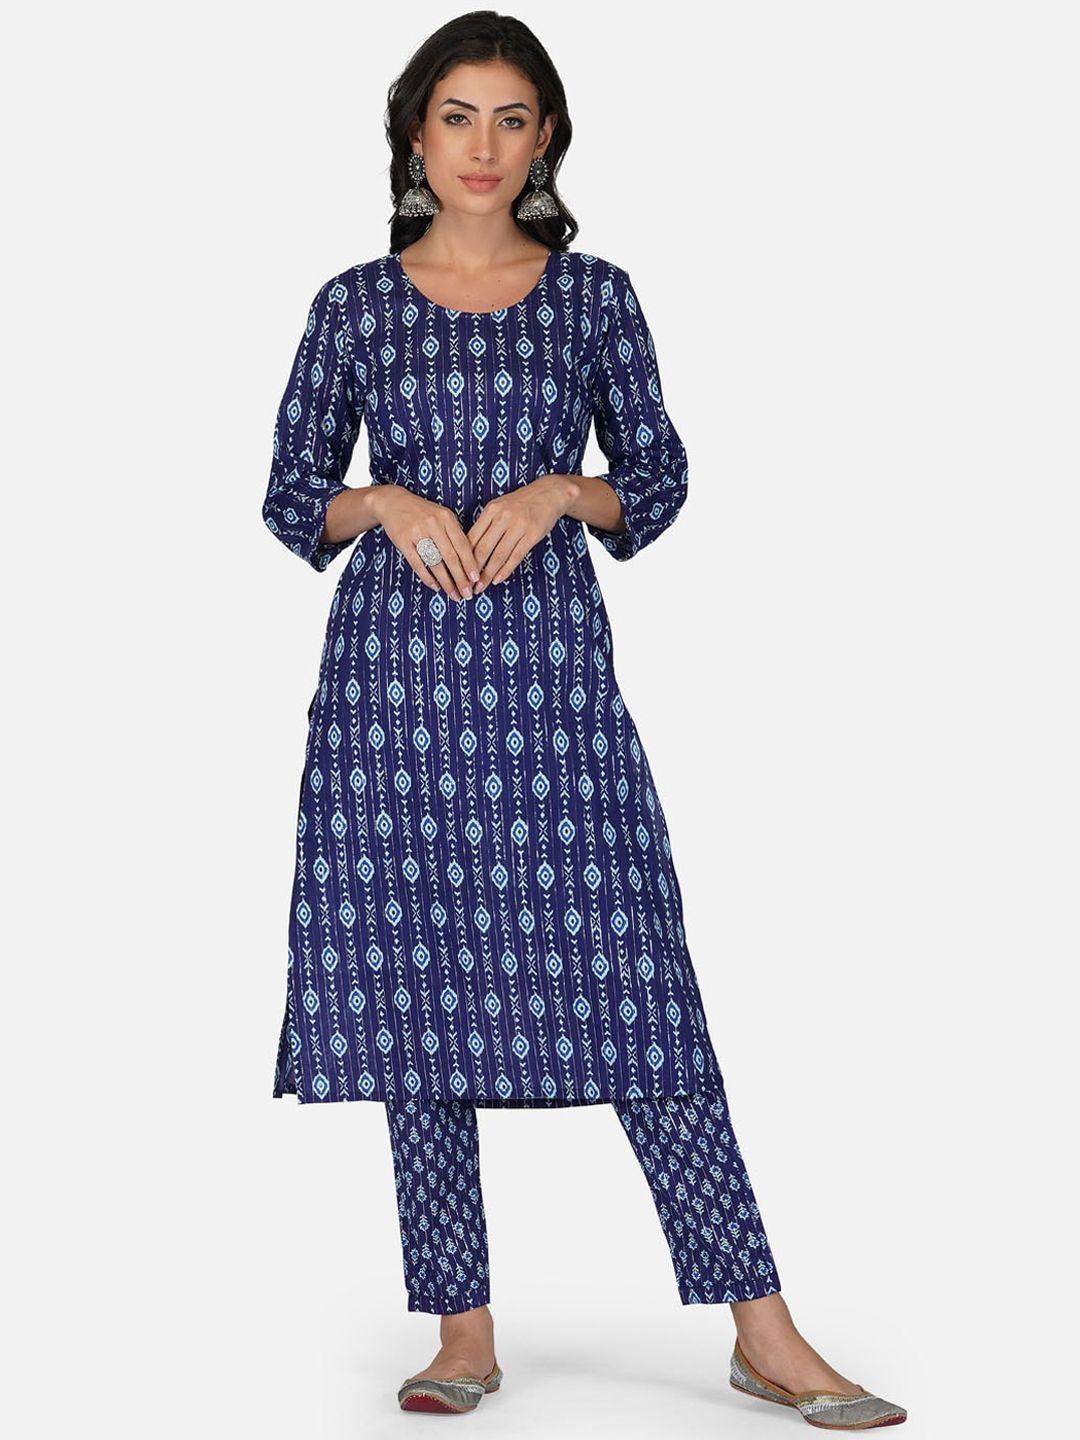 aarti fashion women ethnic motifs printed kurta with trousers